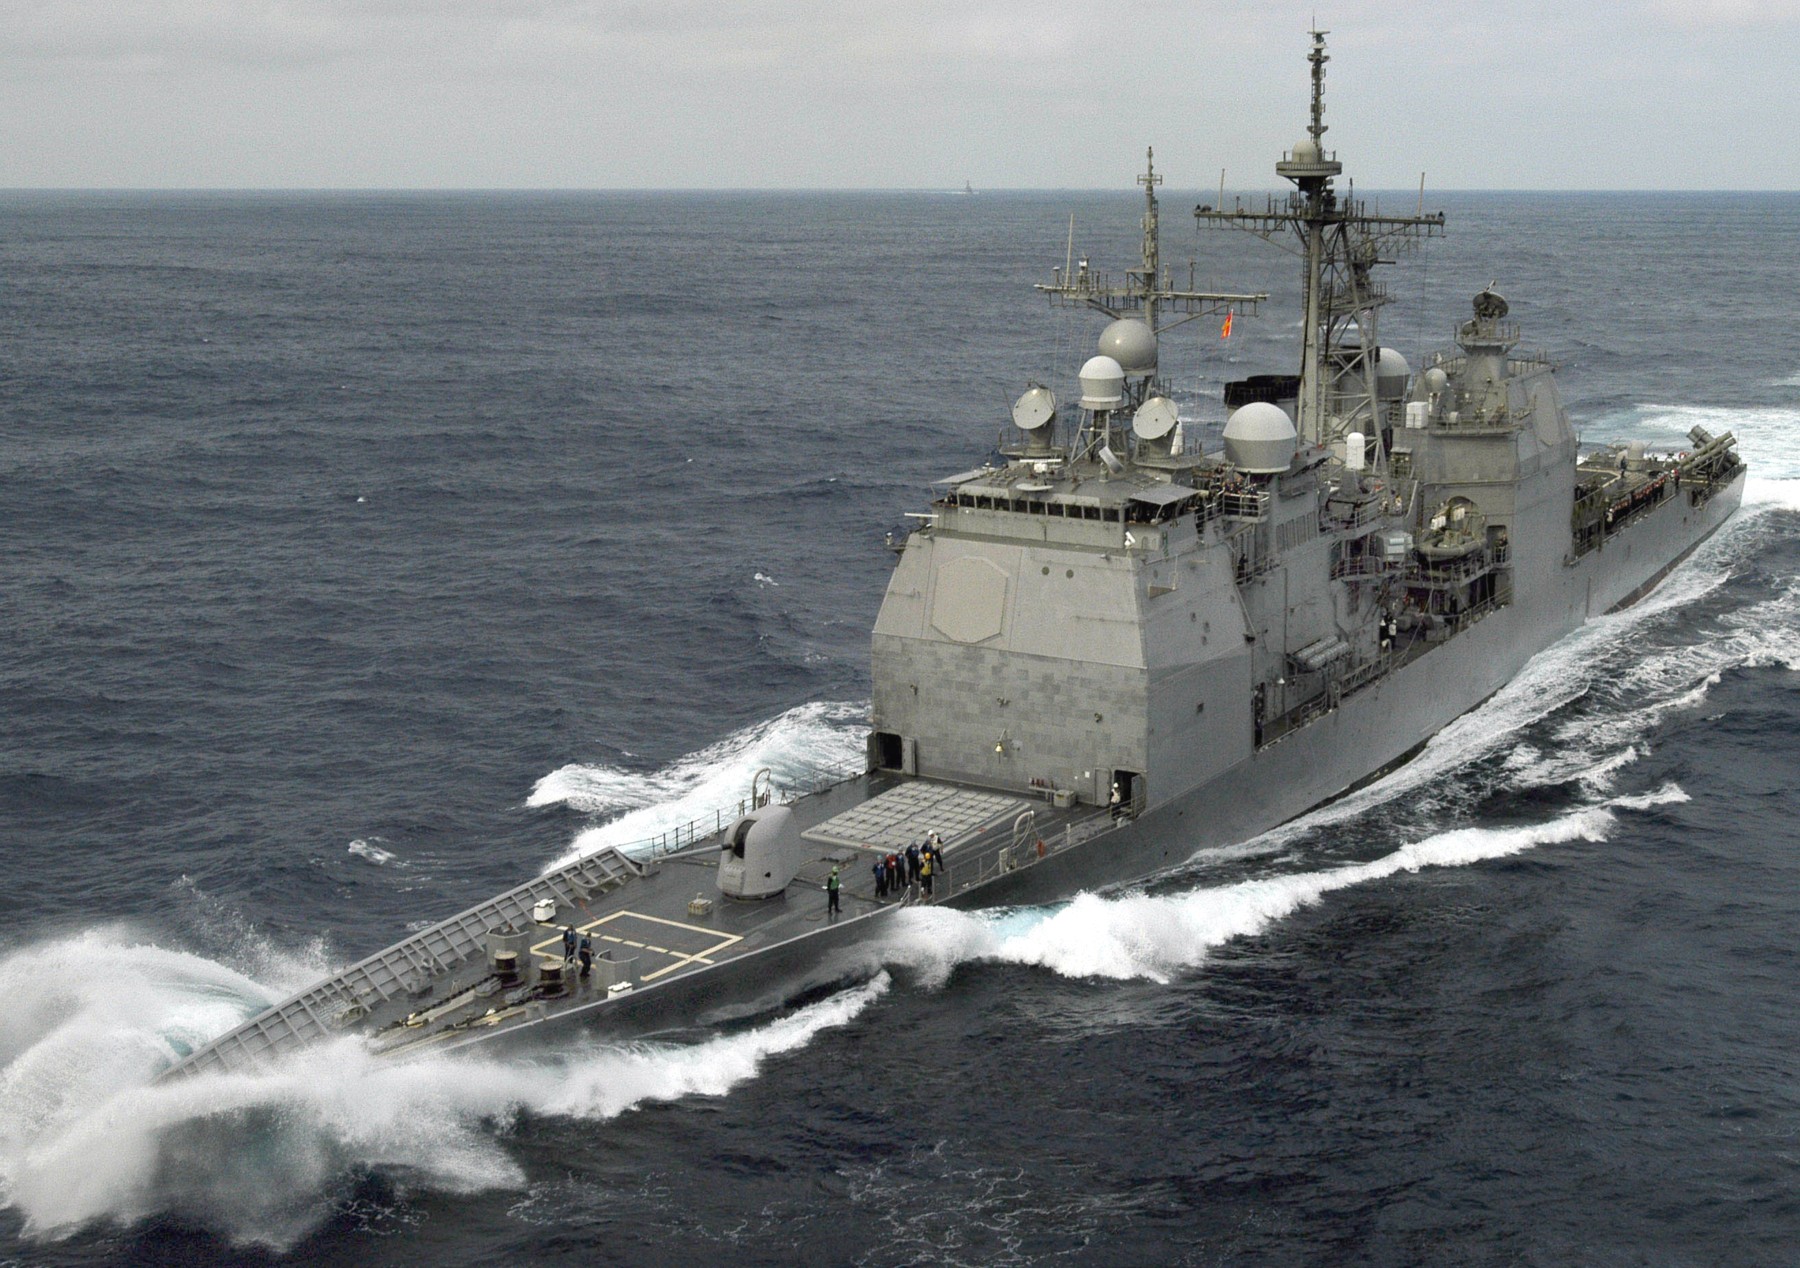 cg-62 uss chancellorsville ticonderoga class guided missile cruiser aegis us navy 09